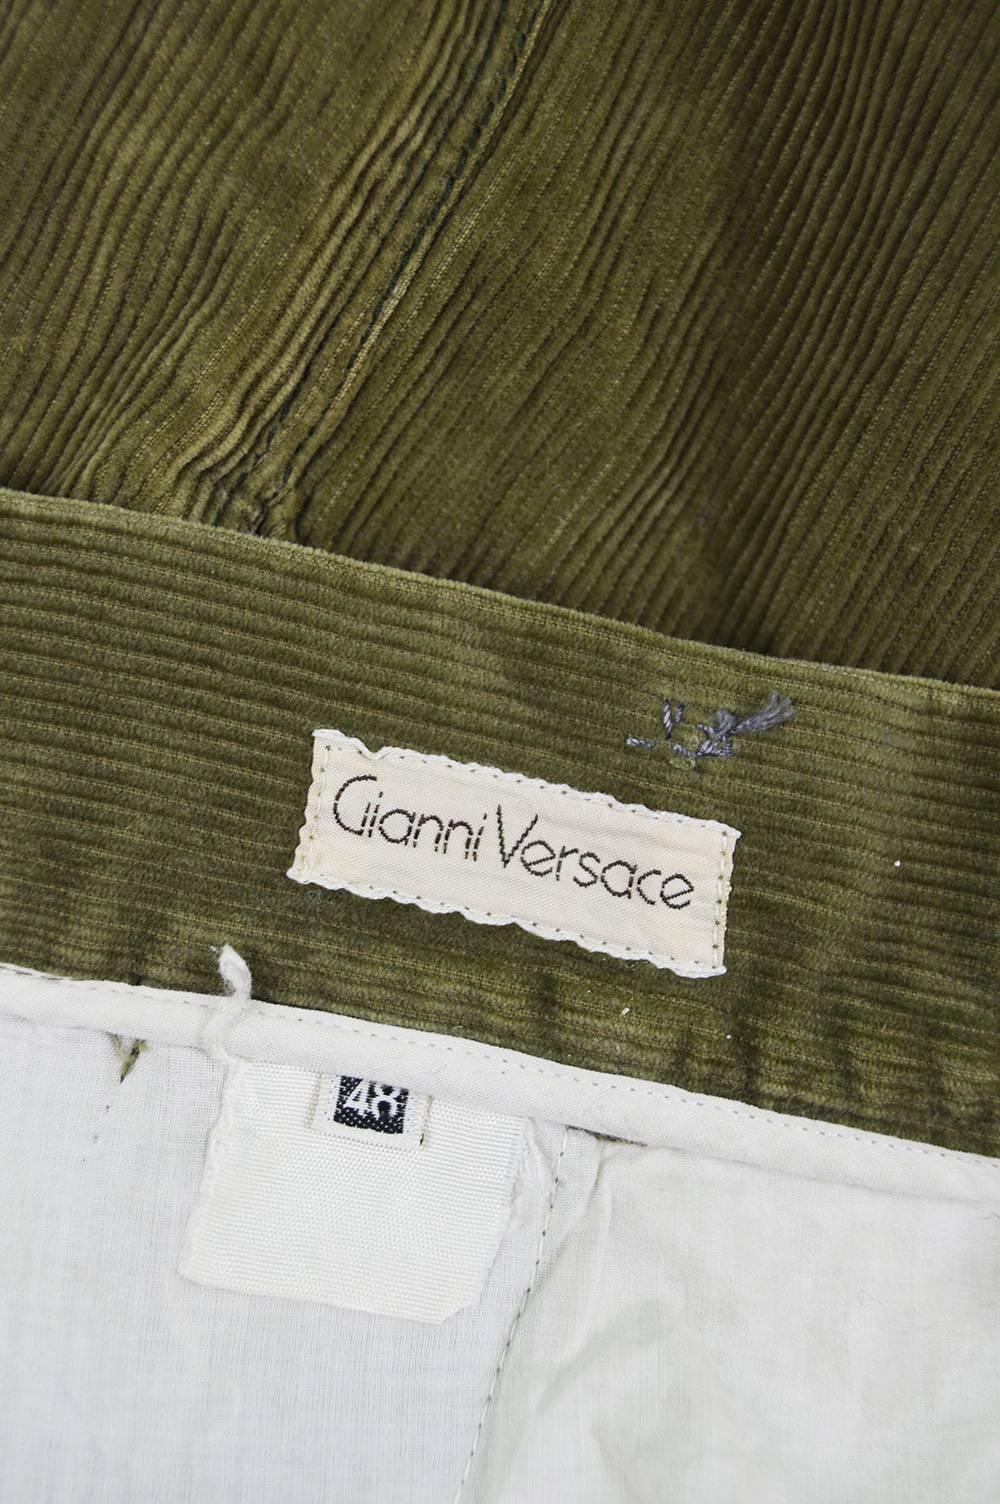 Gianni Versace Men's Green Corduroy Pants with Jumbo Cord Turn Ups, 1980s For Sale 3